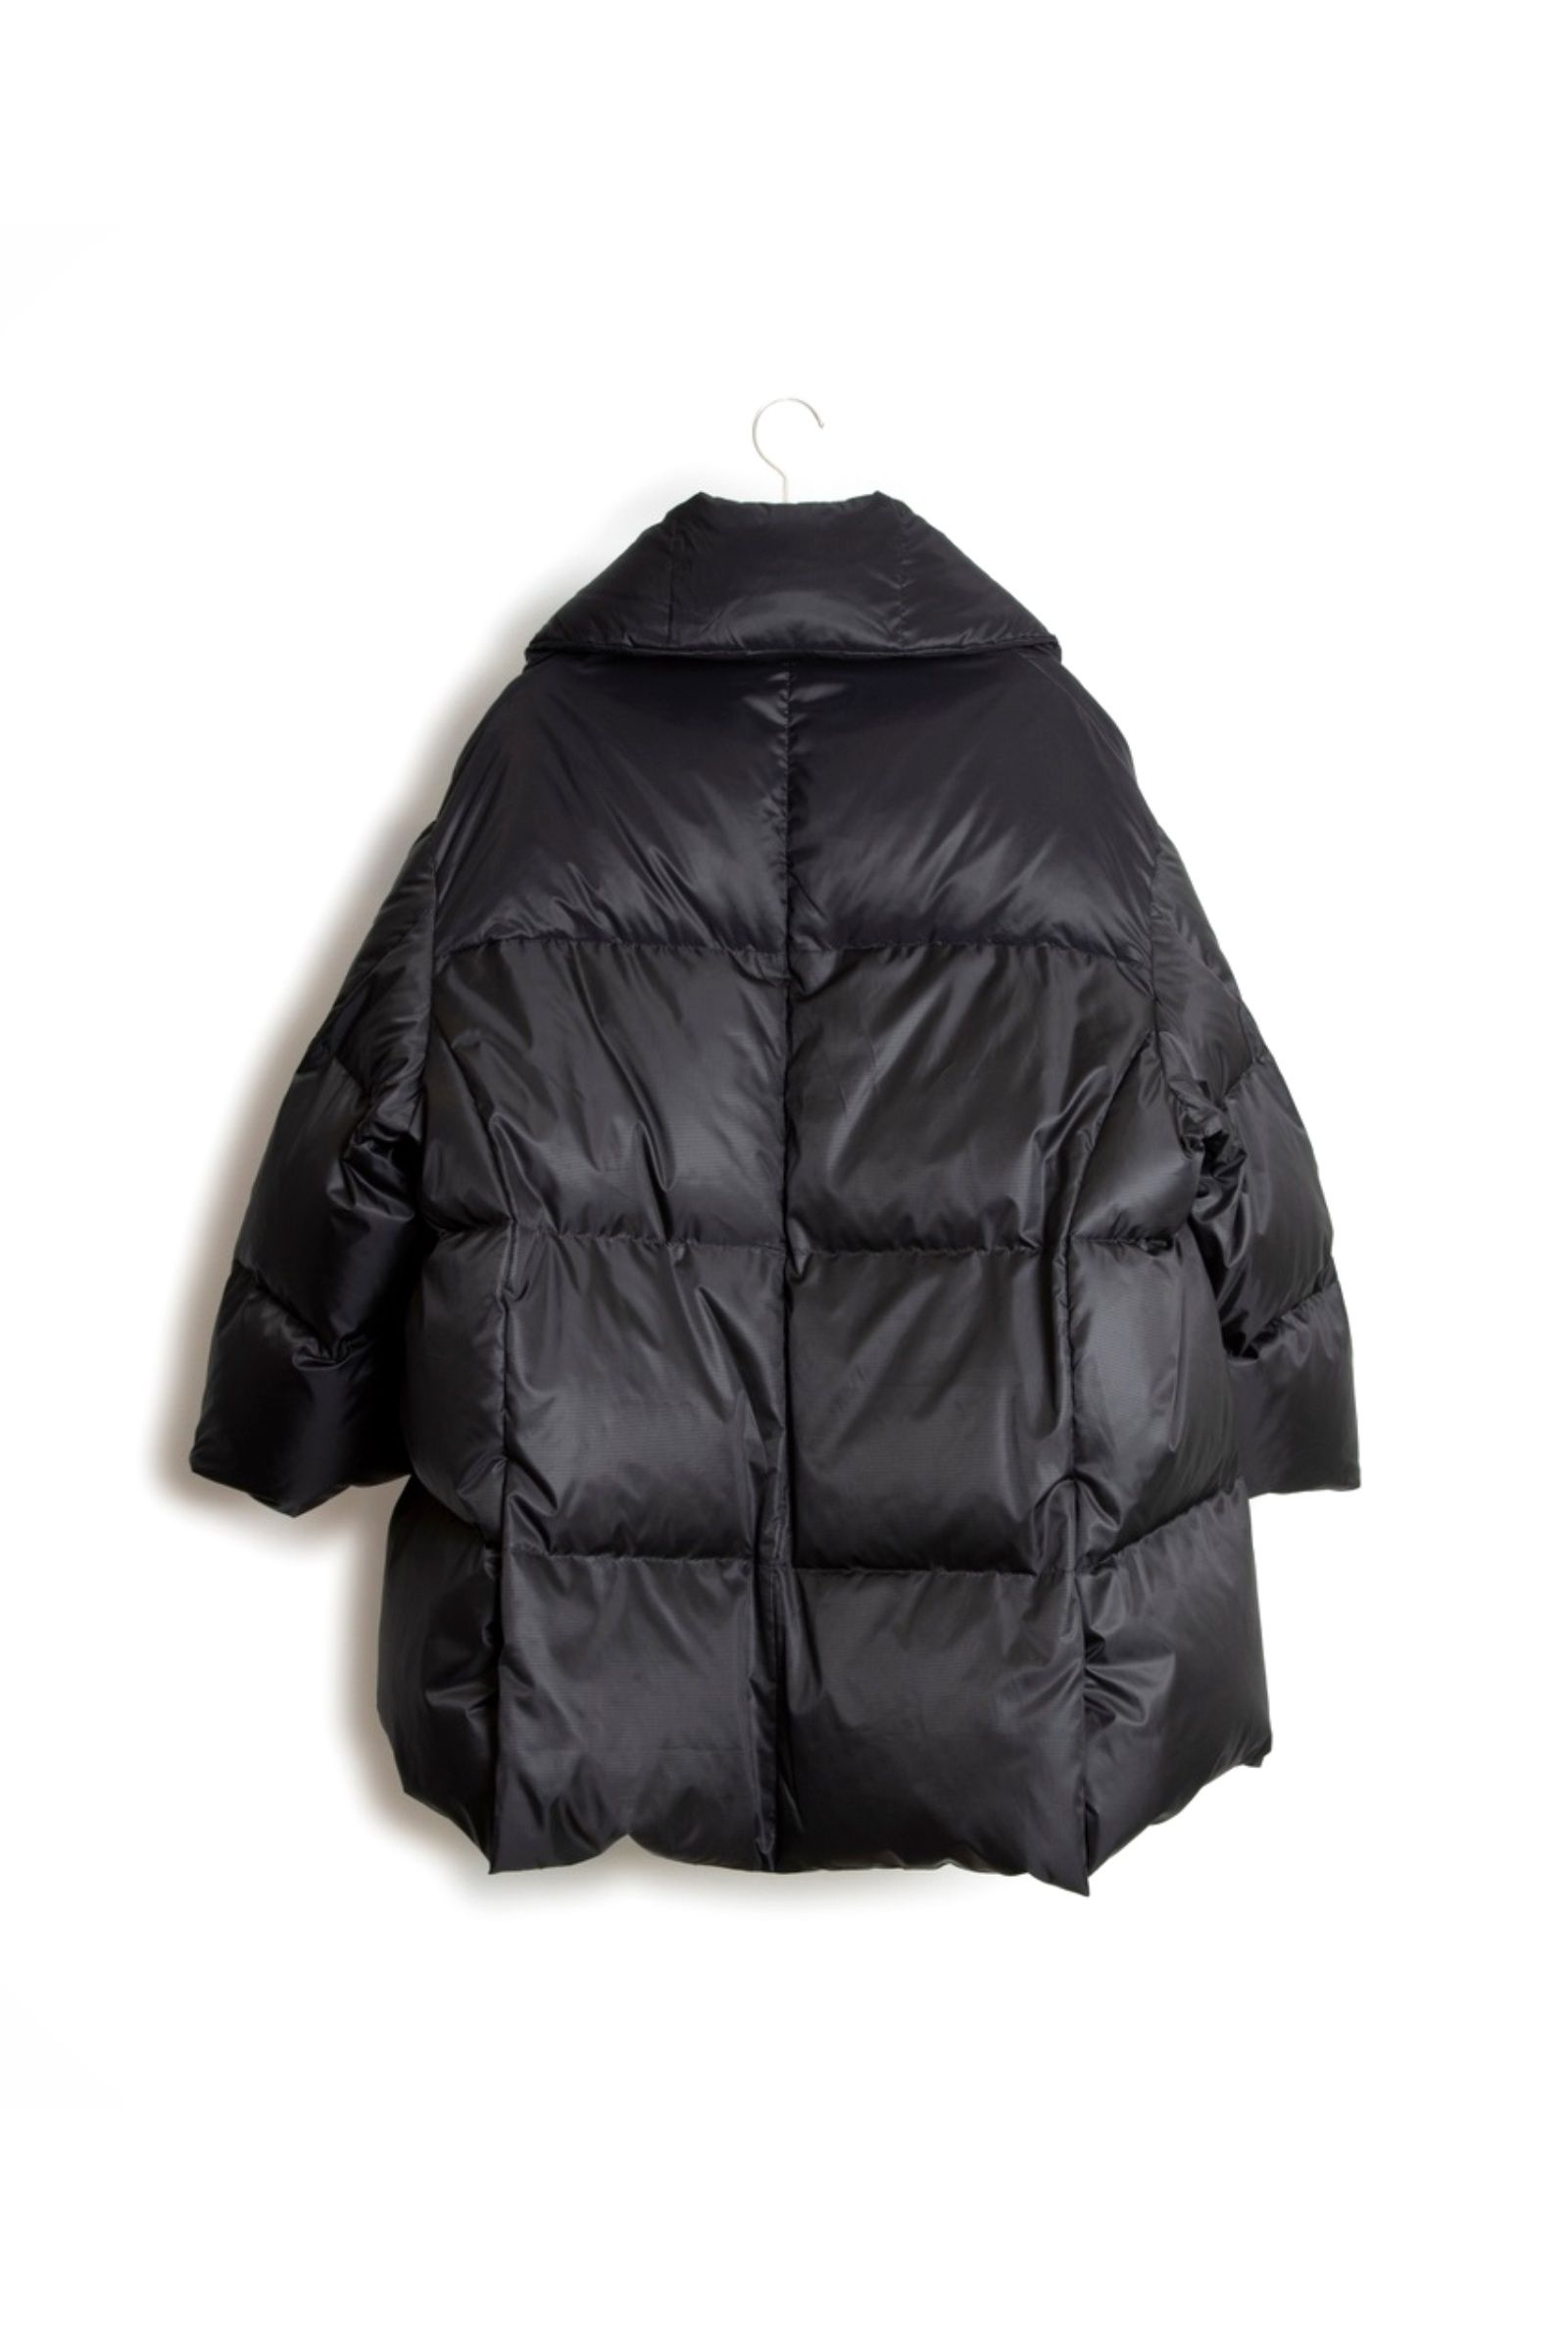 FUMITO GANRYU - vintage modern lapelled down jacket 21aw